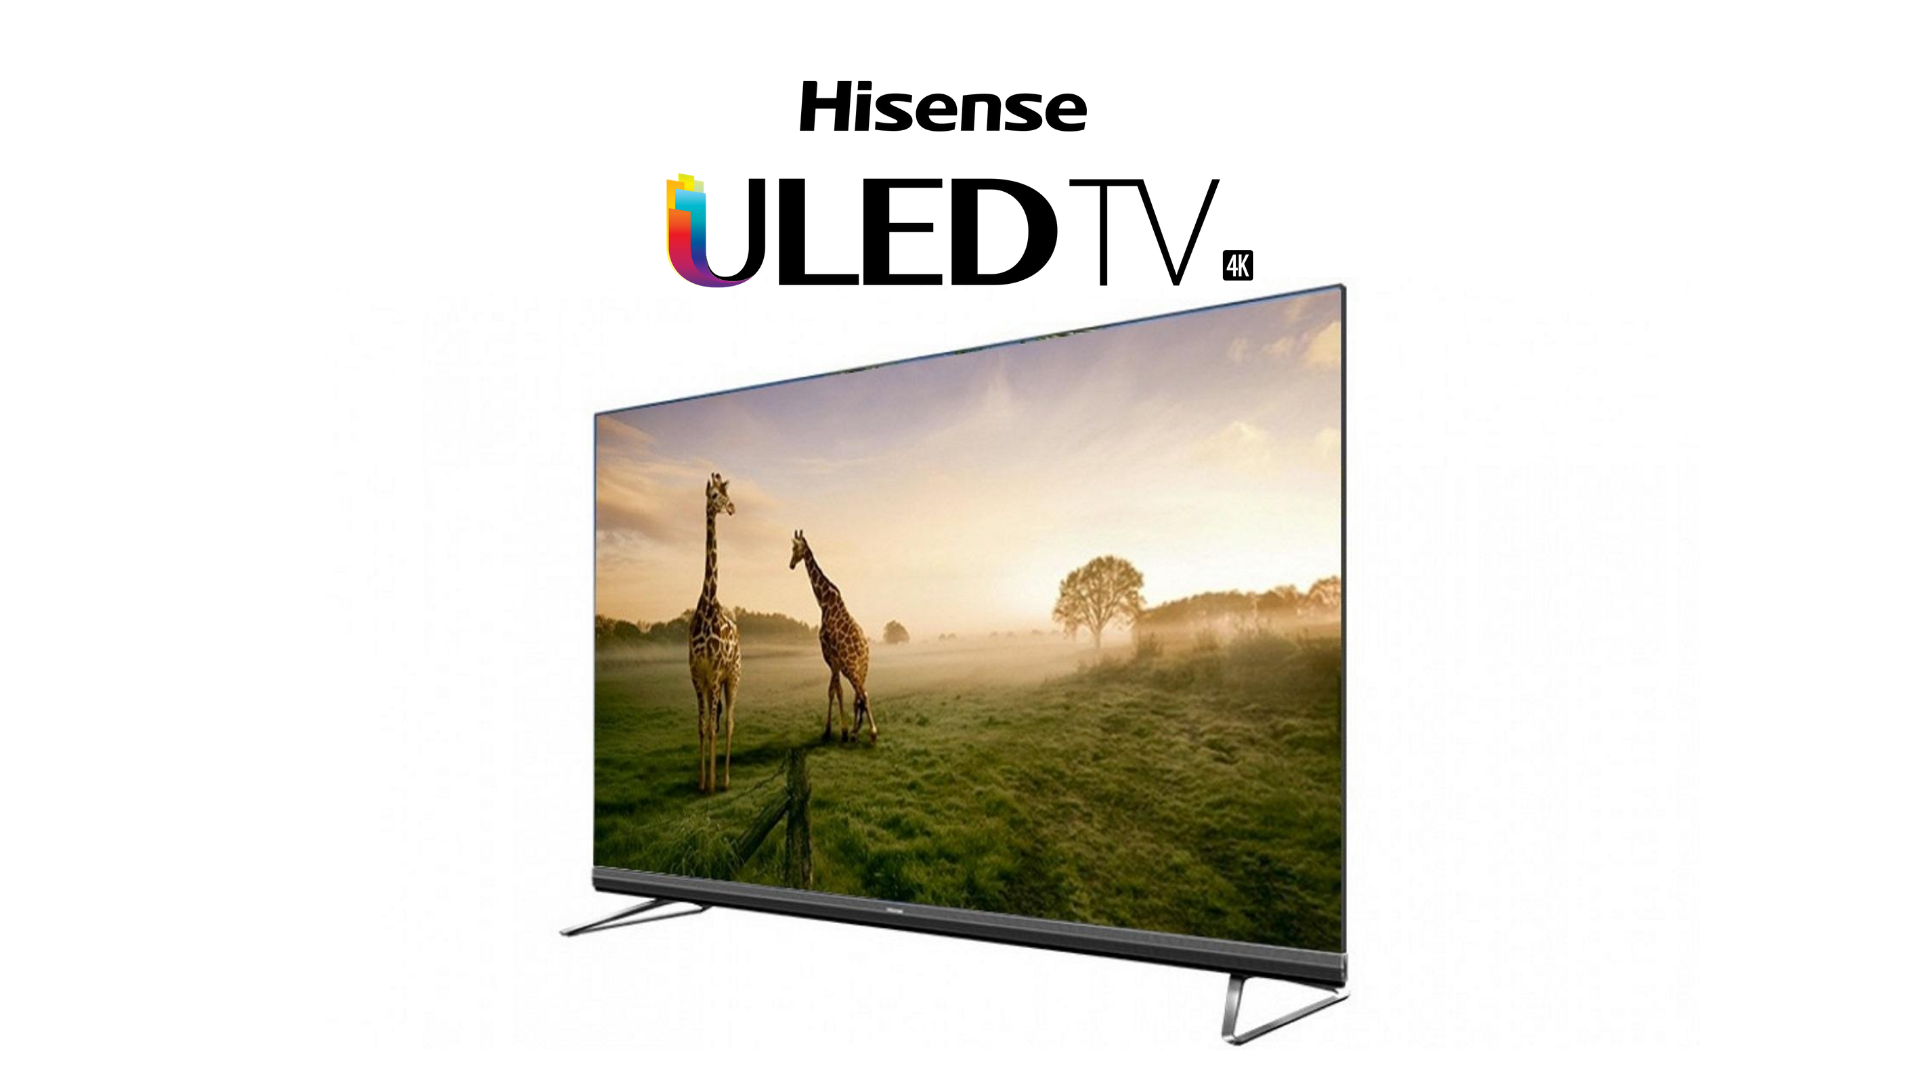 Hisense ULED 55 inch TV Review (55B8000UW)